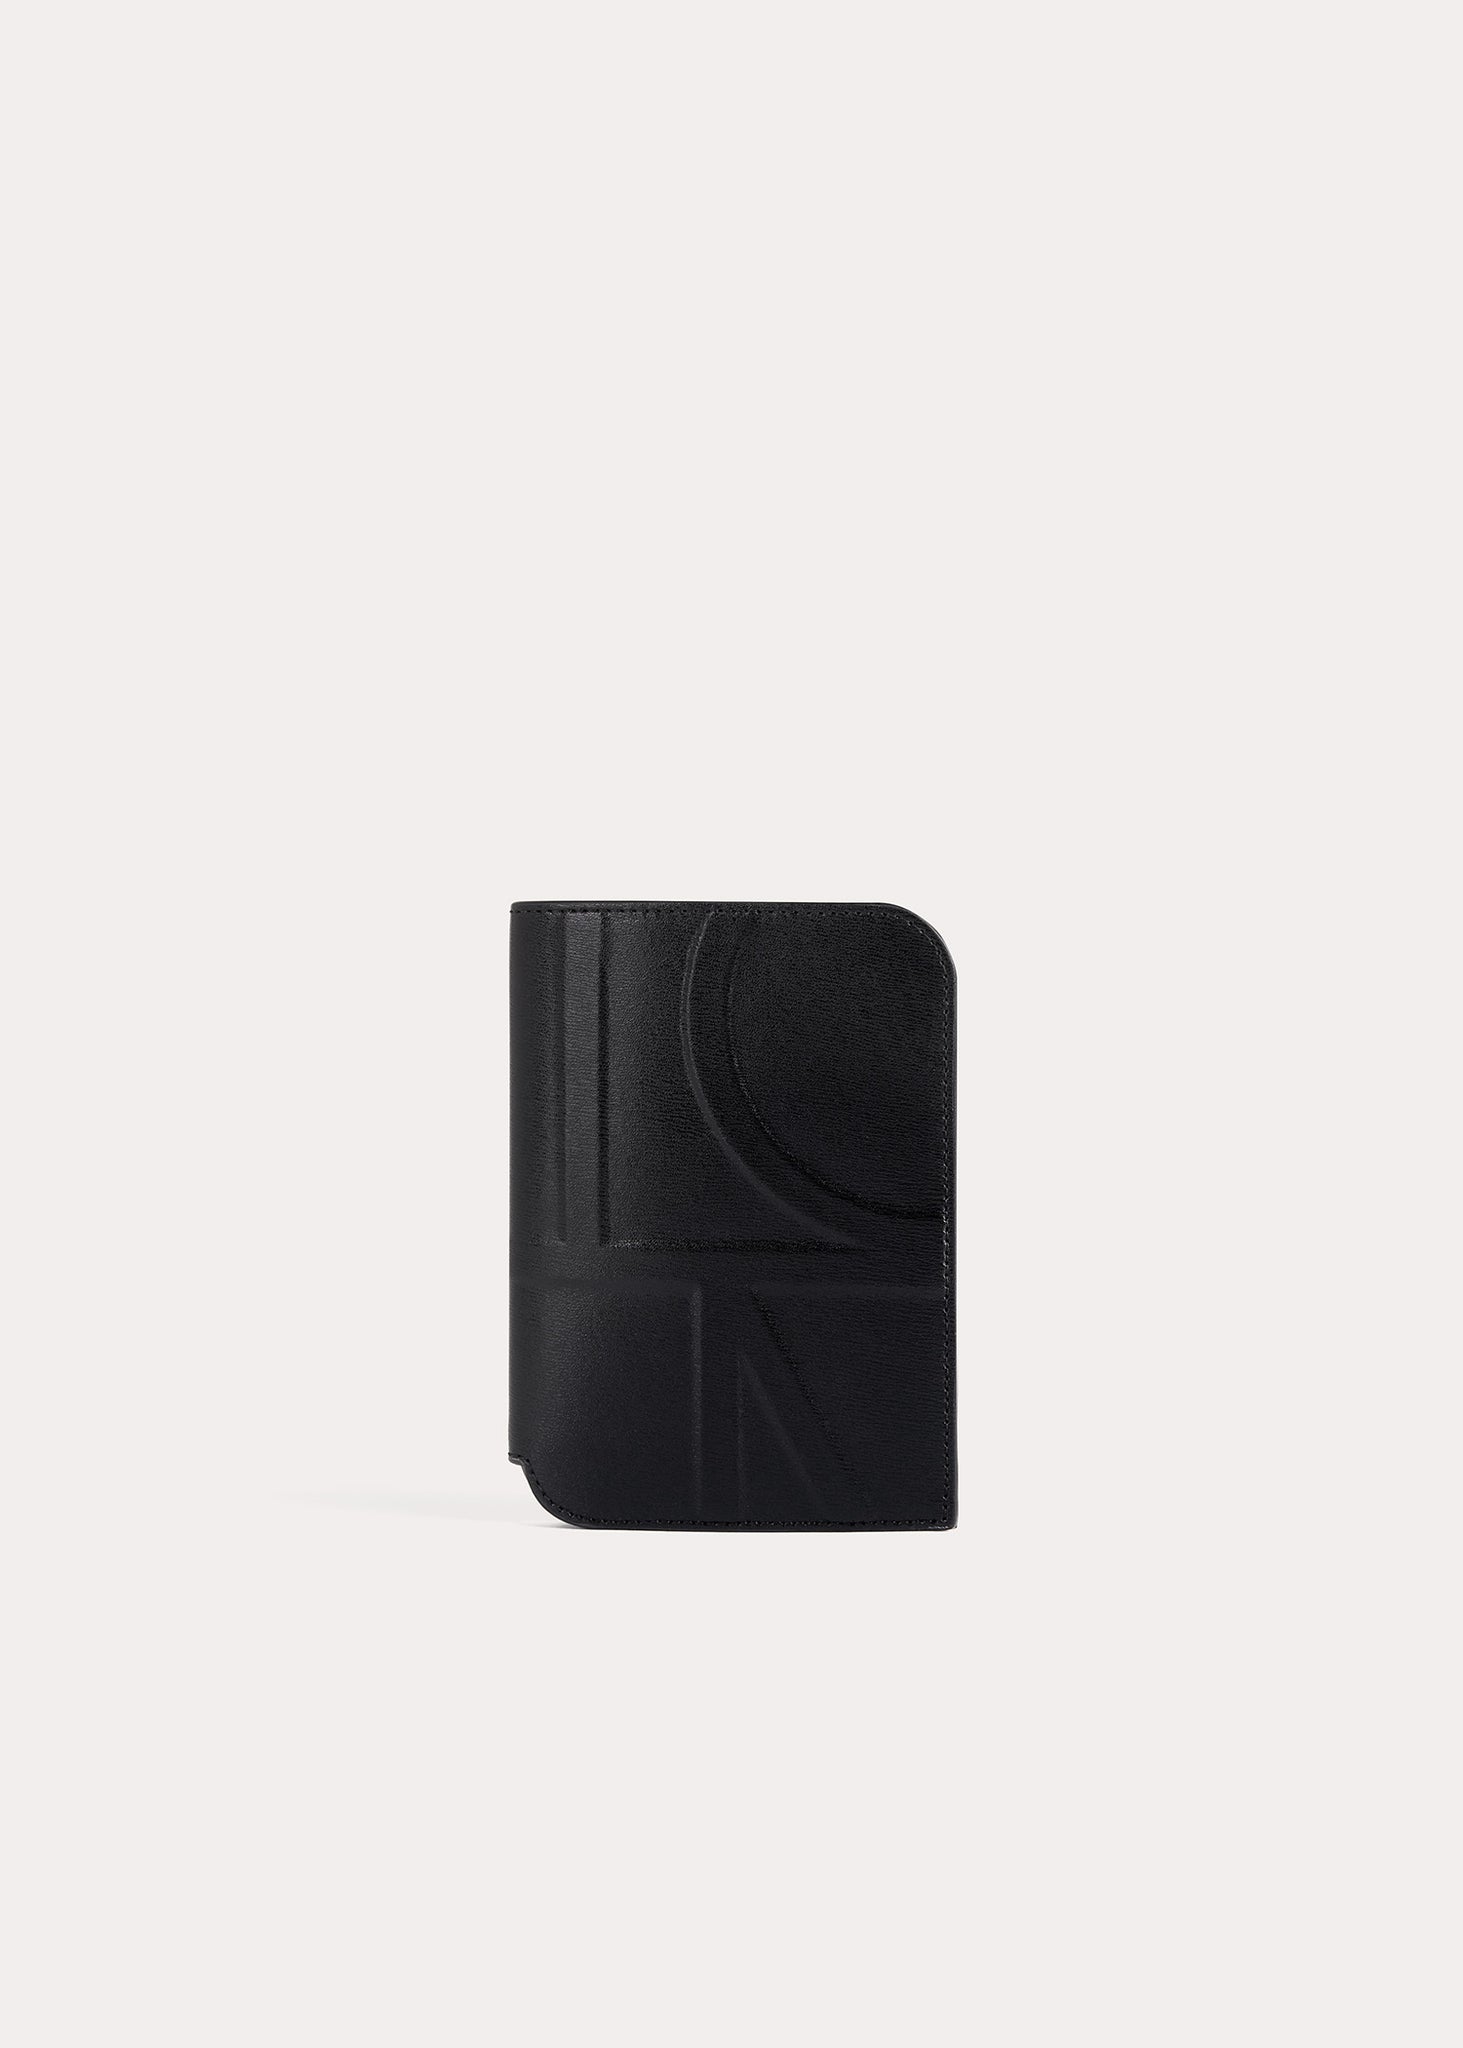 Monogram leather passport holder black